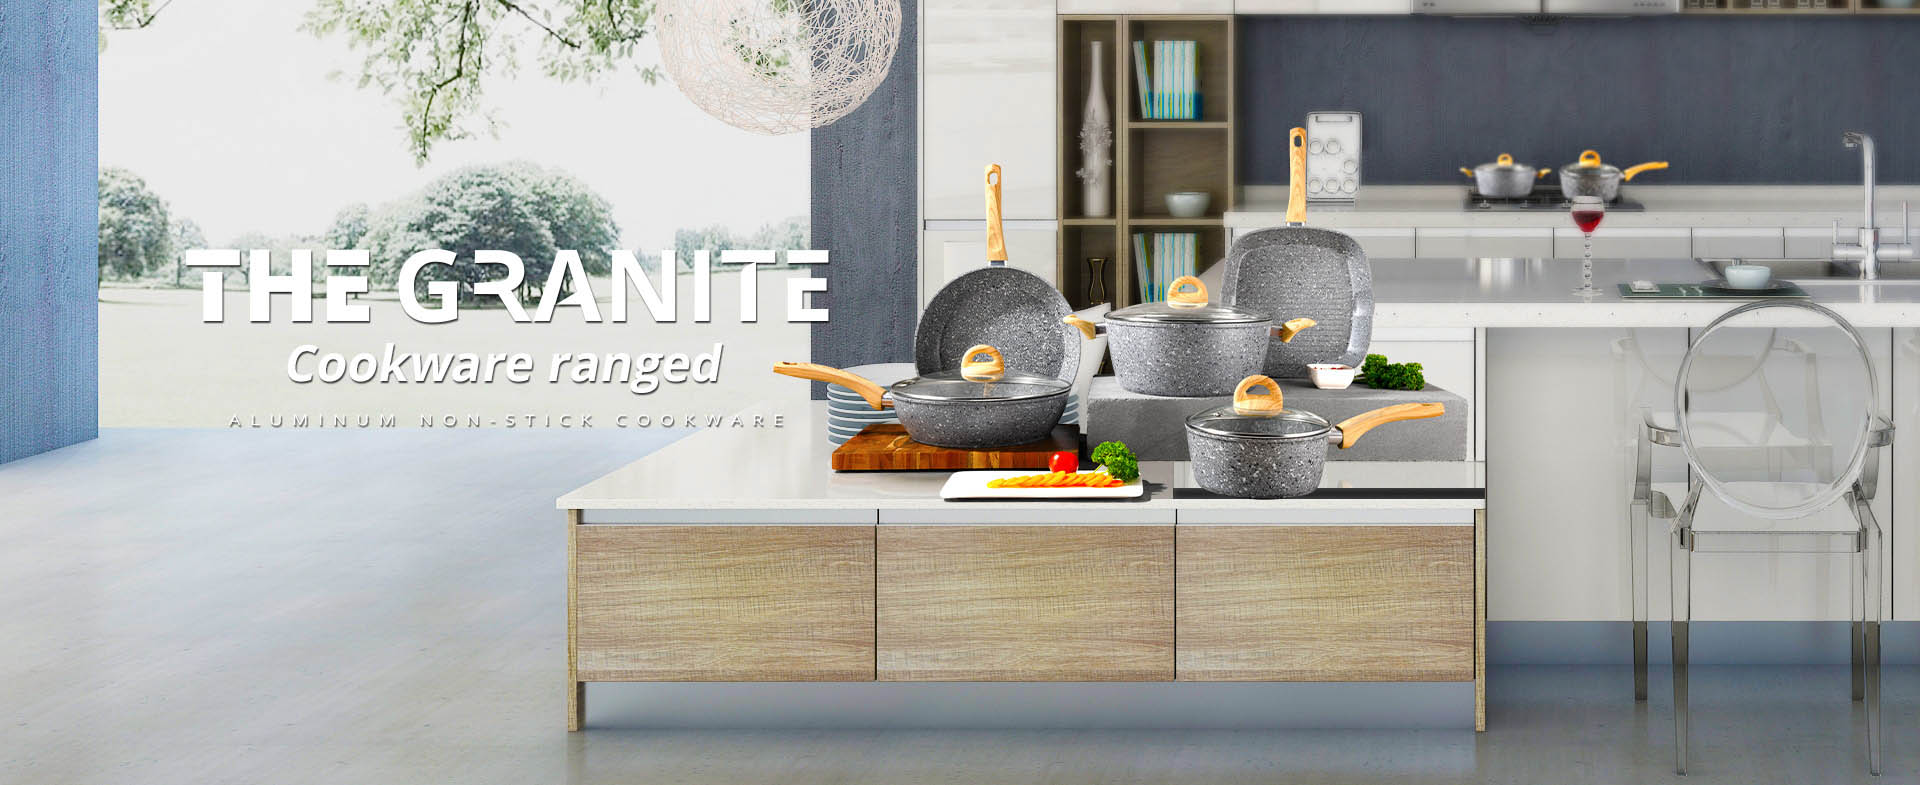 The Granite Cookware ranged